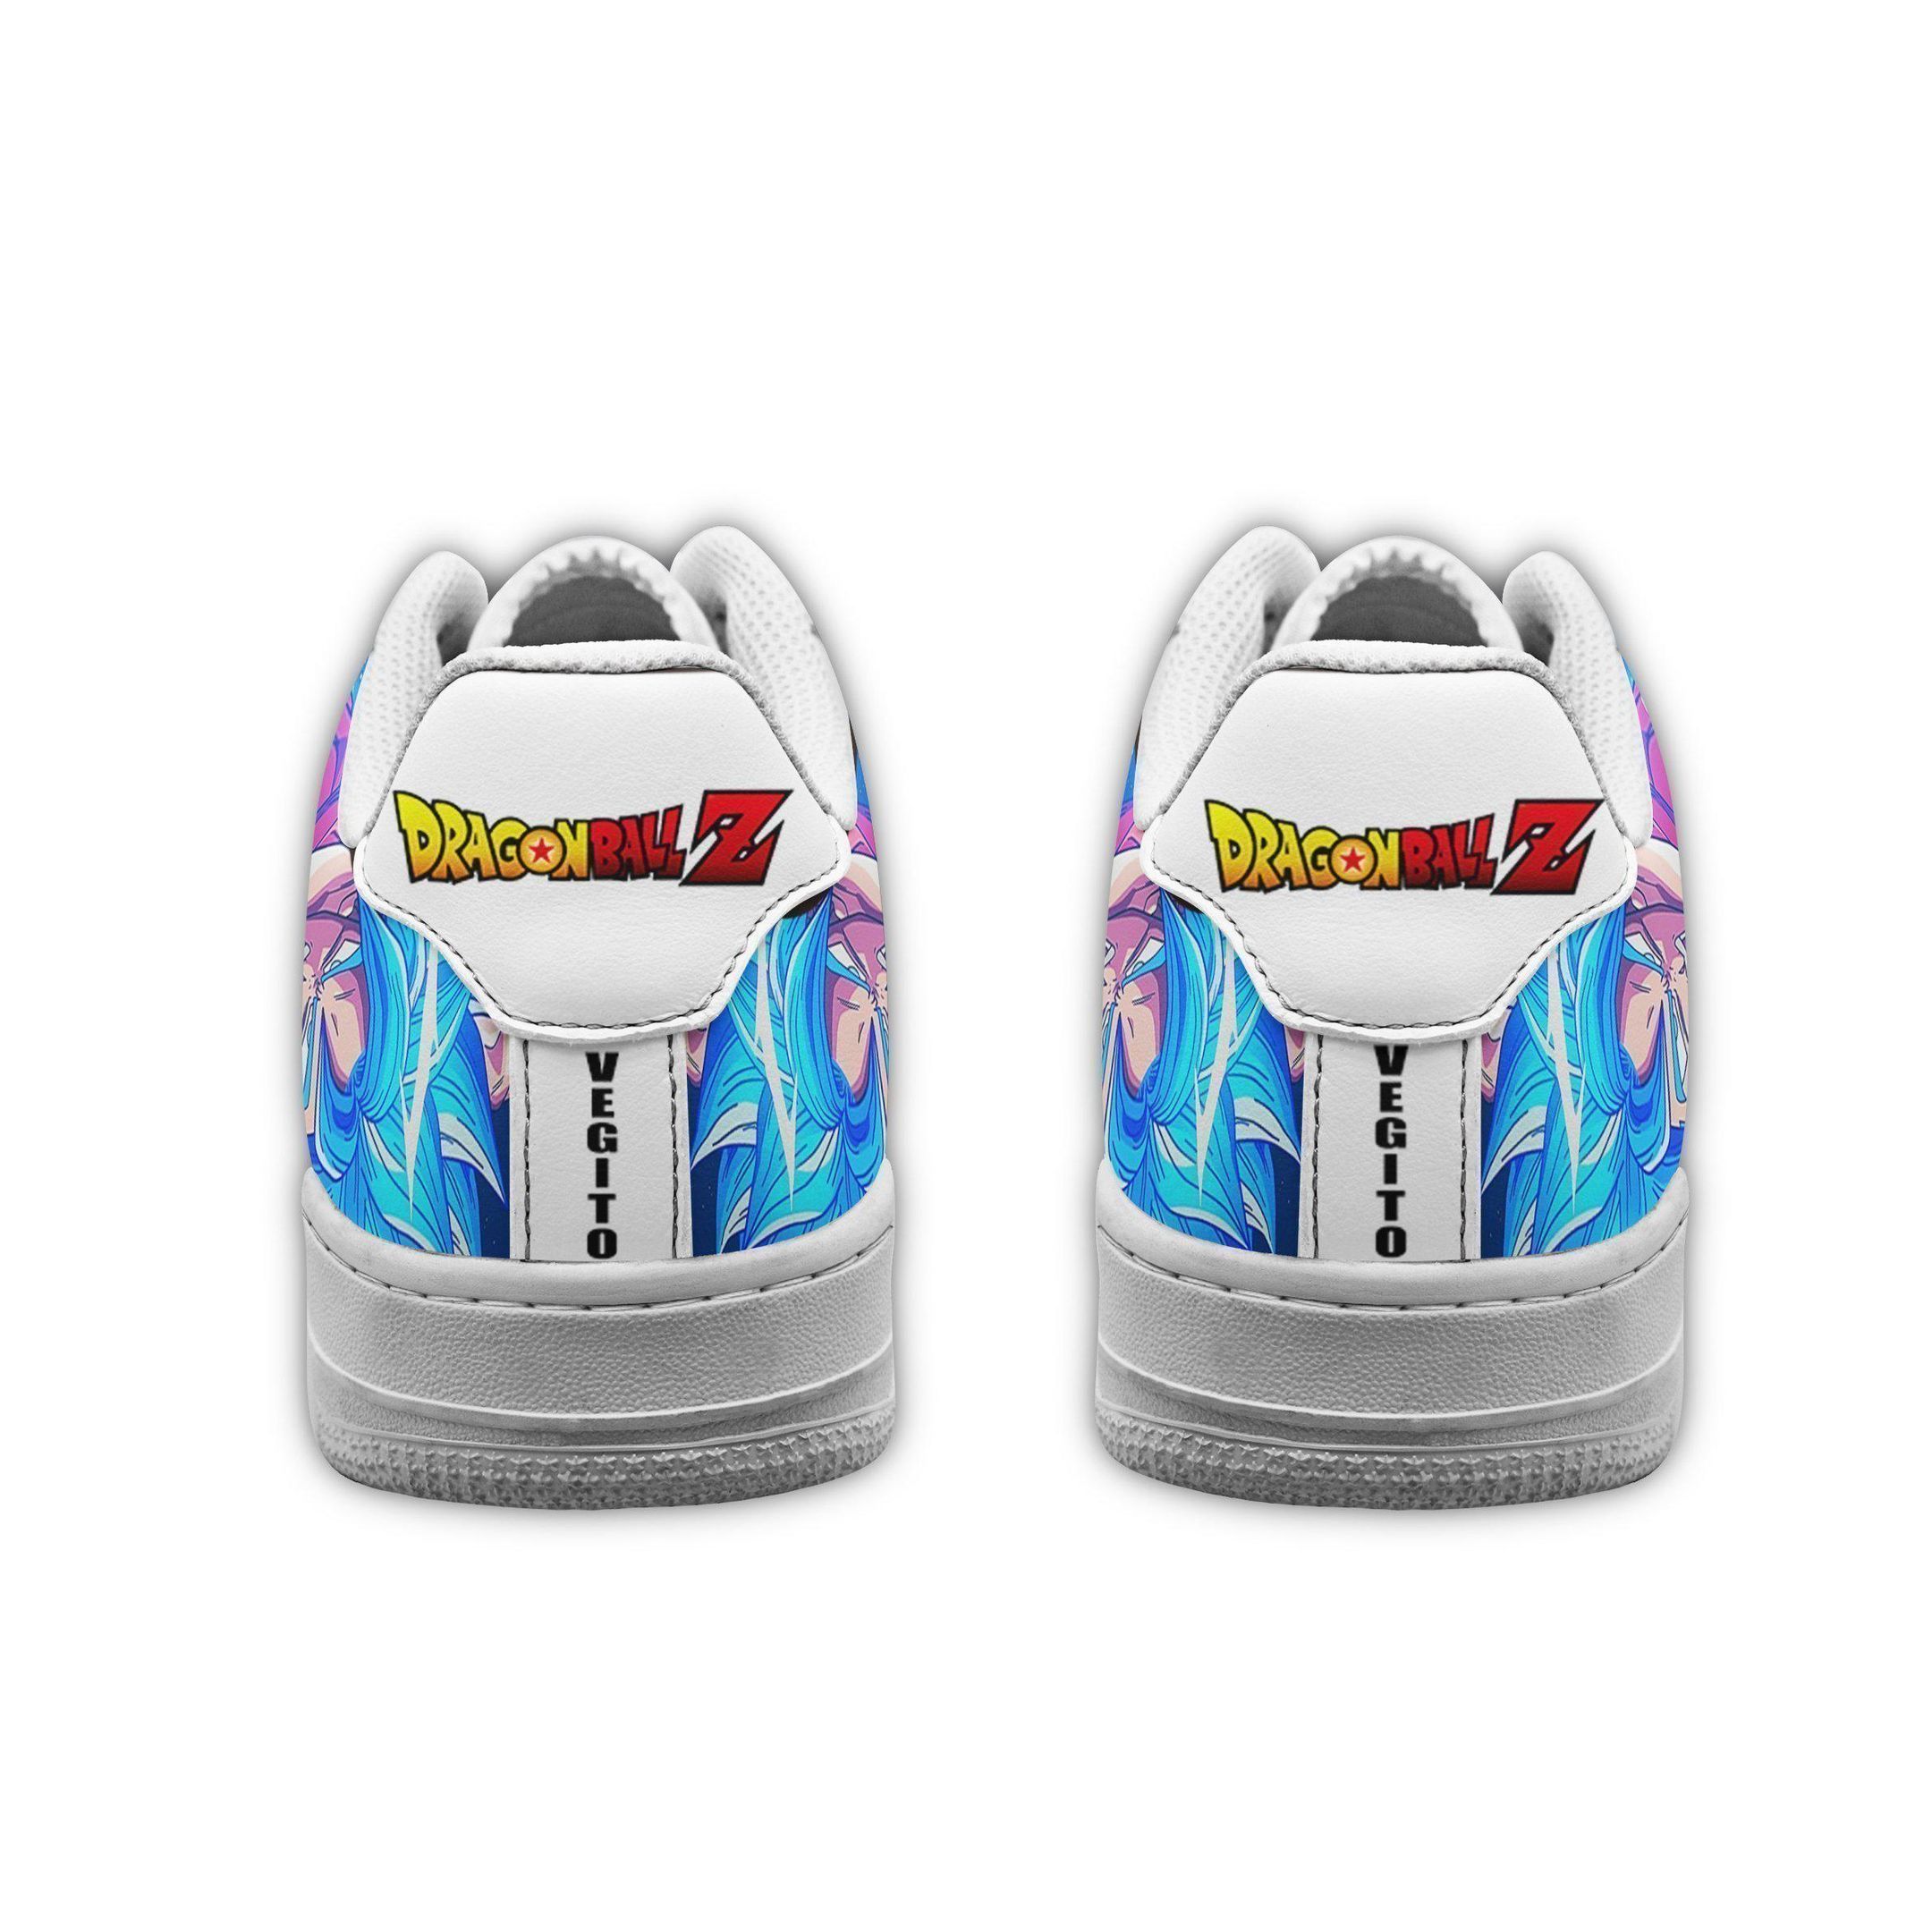 Vegito Air Shoes Dragon Ball Z Anime Shoes Fan Gift GO1012